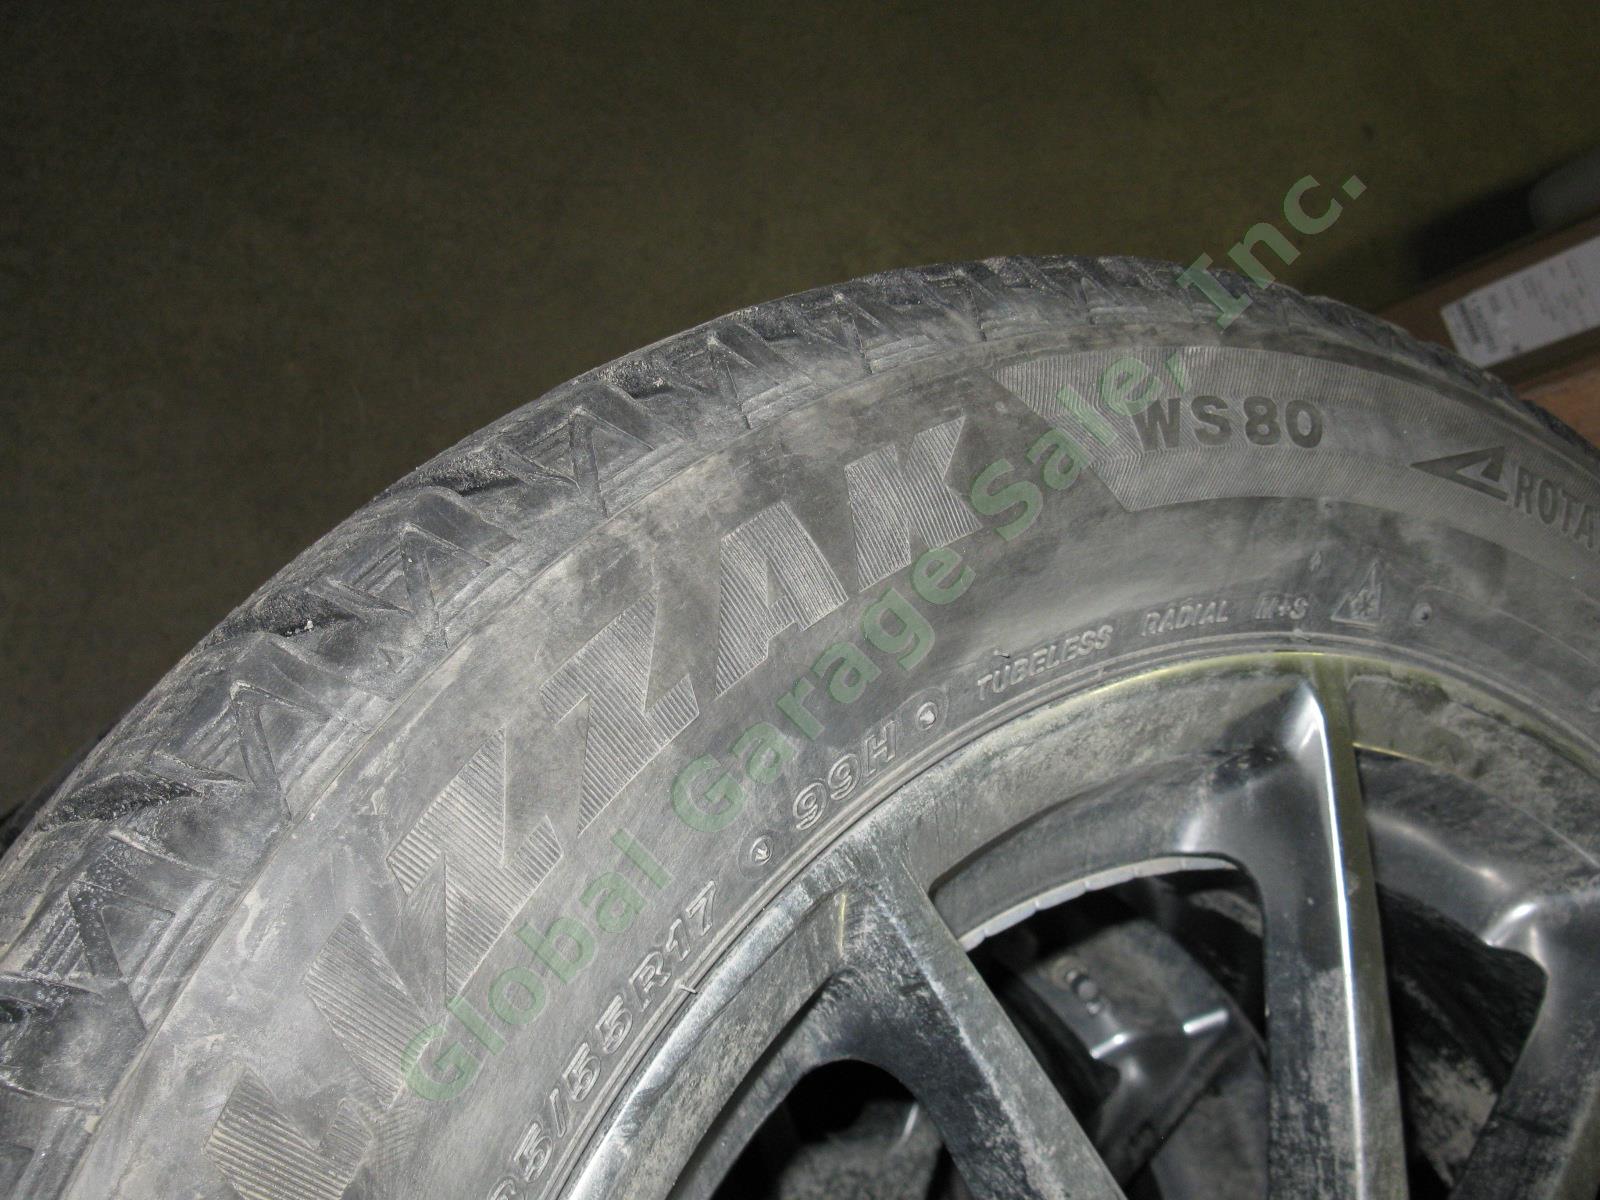 4 Bridgestone Blizzak WS80 235/55R17 Winter Snow Tires On 17" Sport Edition Rims 1